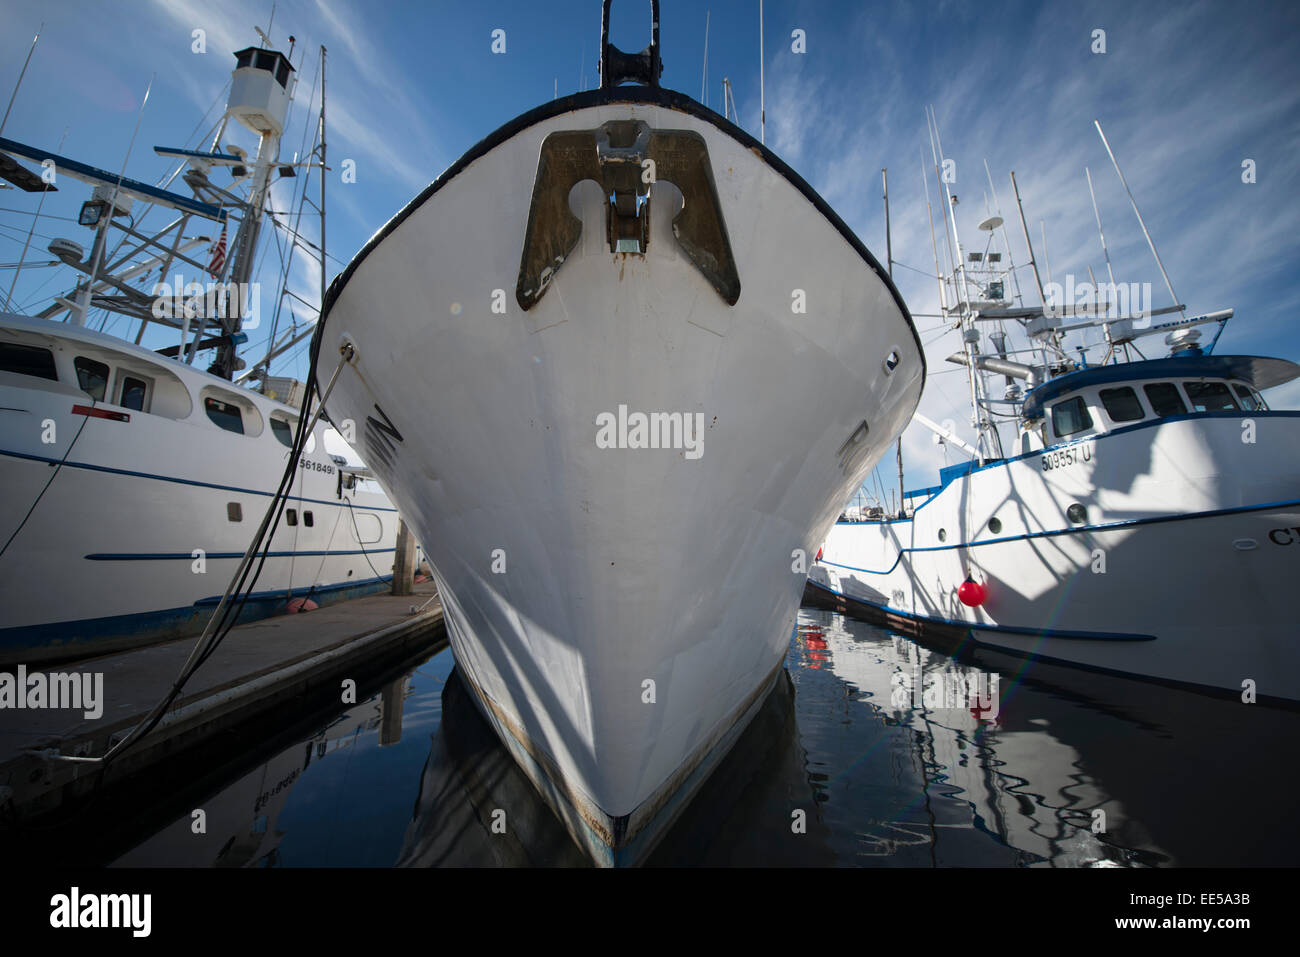 Commerciale barche da pesca, G Street Pier, Baia di San Diego, San Diego, California USA Foto Stock